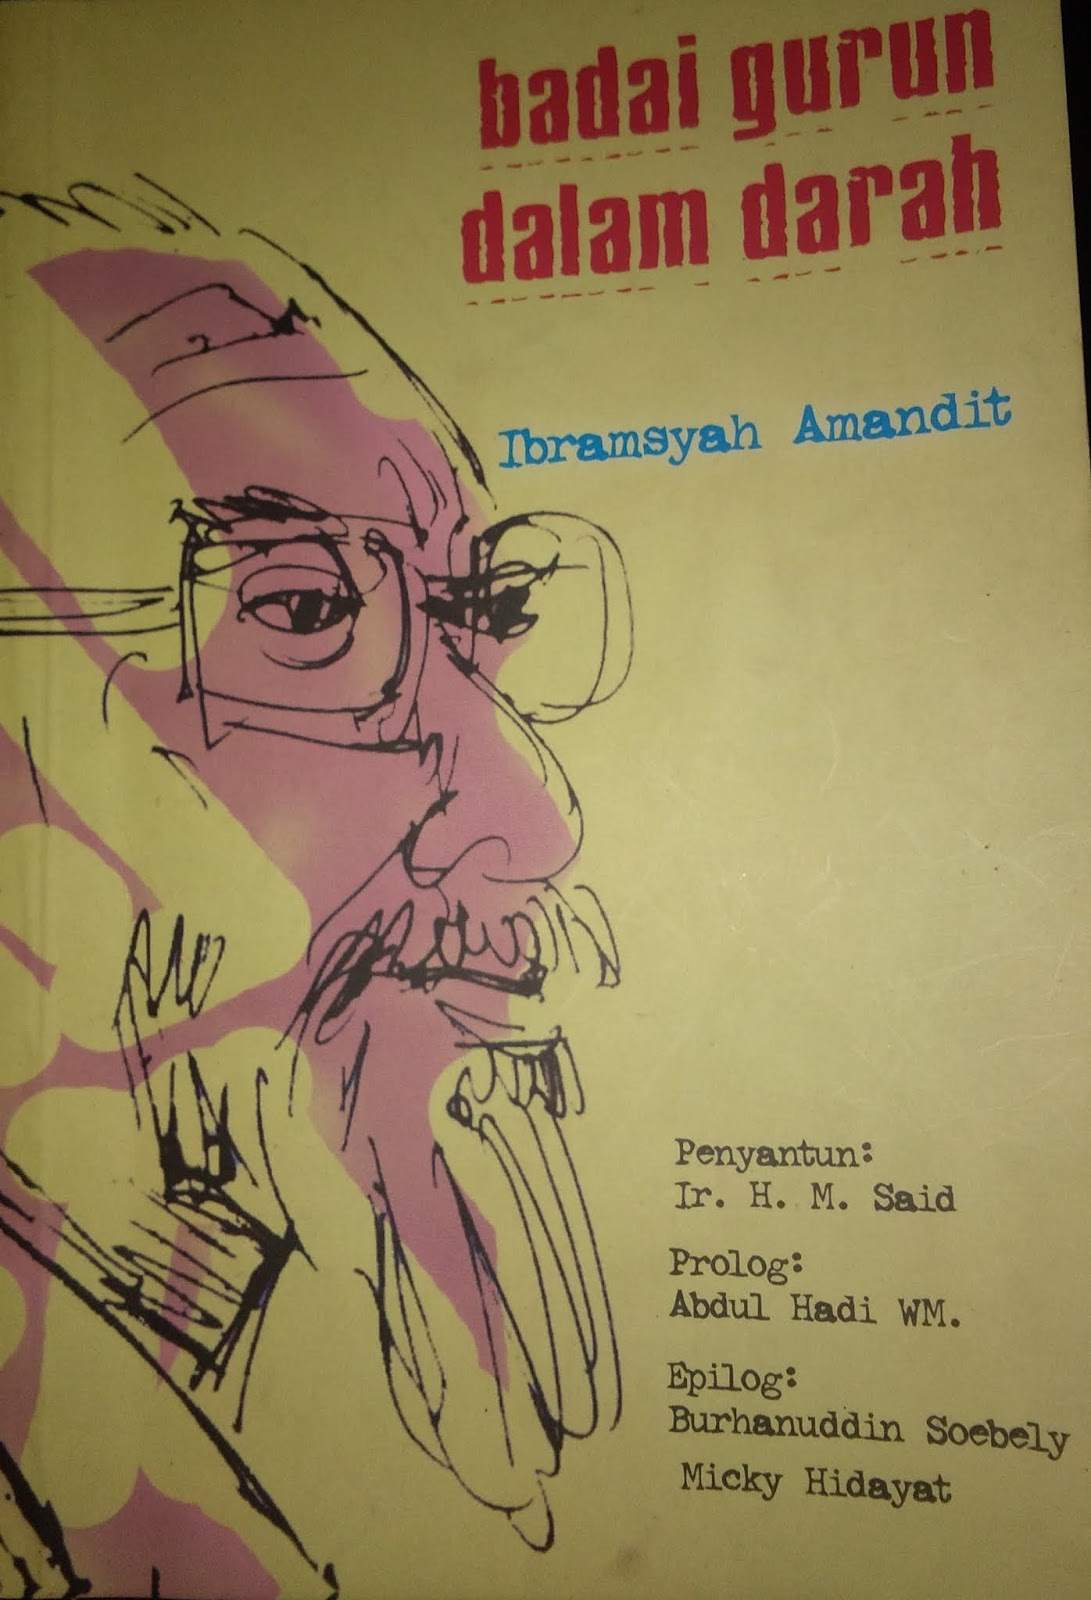 Puisi Puisi Ibramsyah Amandit Dalam Badai Gurun Redaksi Sukma